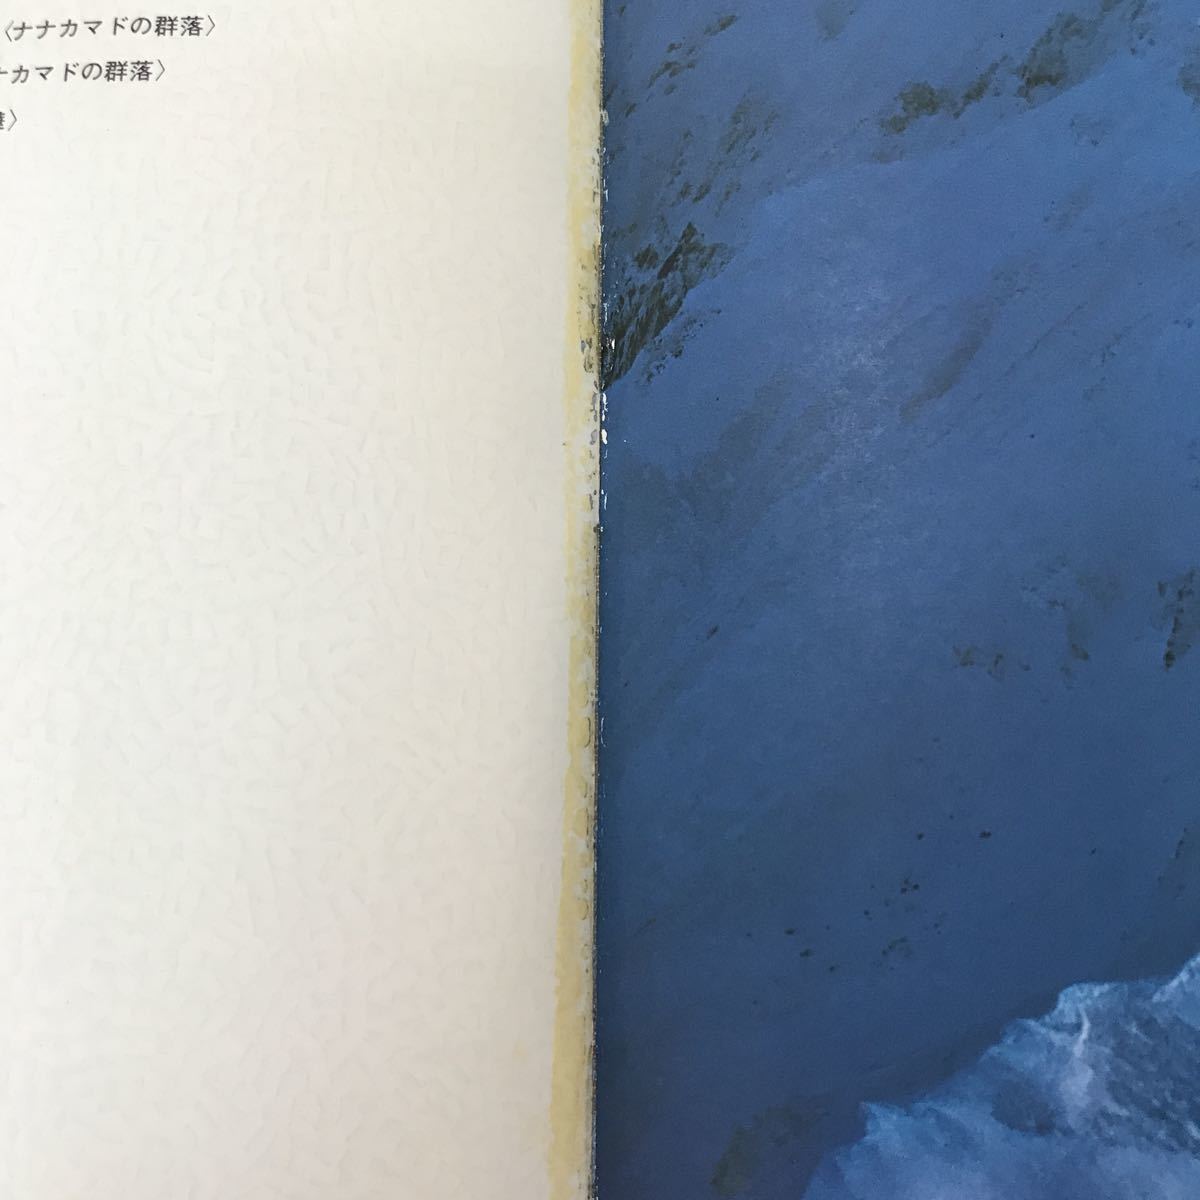 J02-063 大雪 DAISETSU 志賀芳彦写真集 日輪社 外箱なし、カバーに擦れや破れ、書籍にページ割れあり_画像4